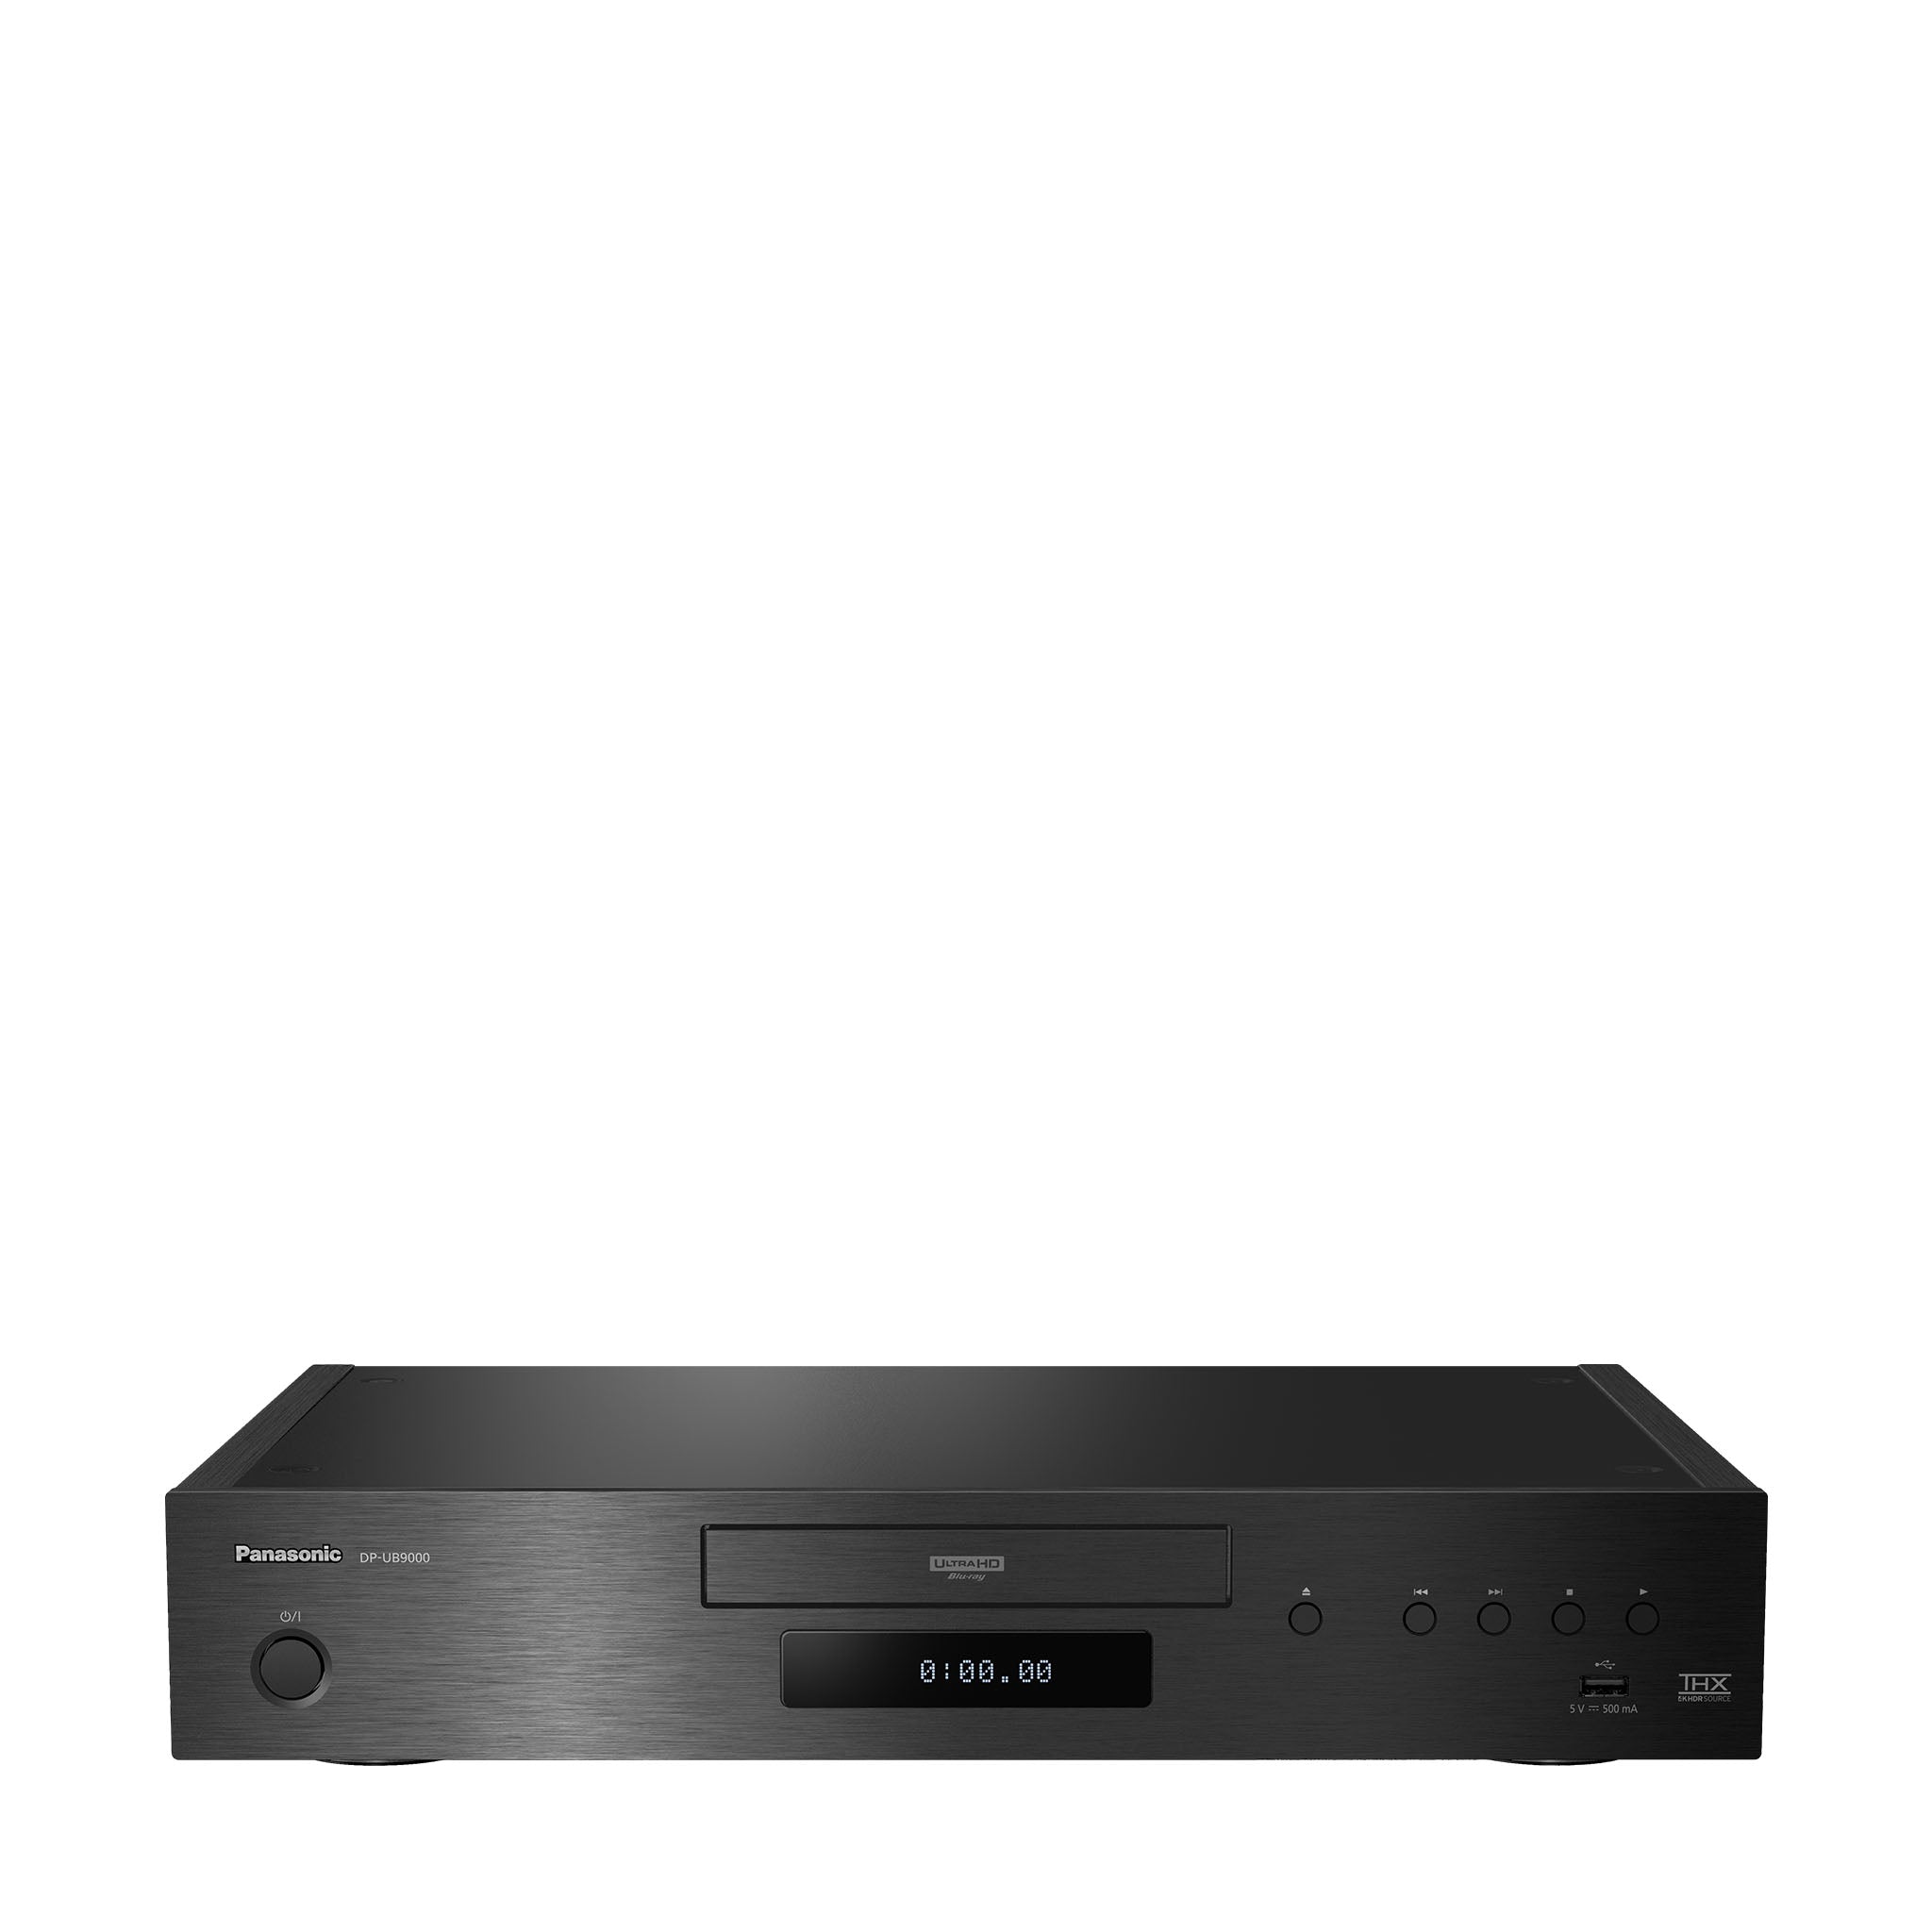 Sony Lecteur Blu-Ray™ 4K Ultra HD | UBP-X700 avec Hi-Res Audio